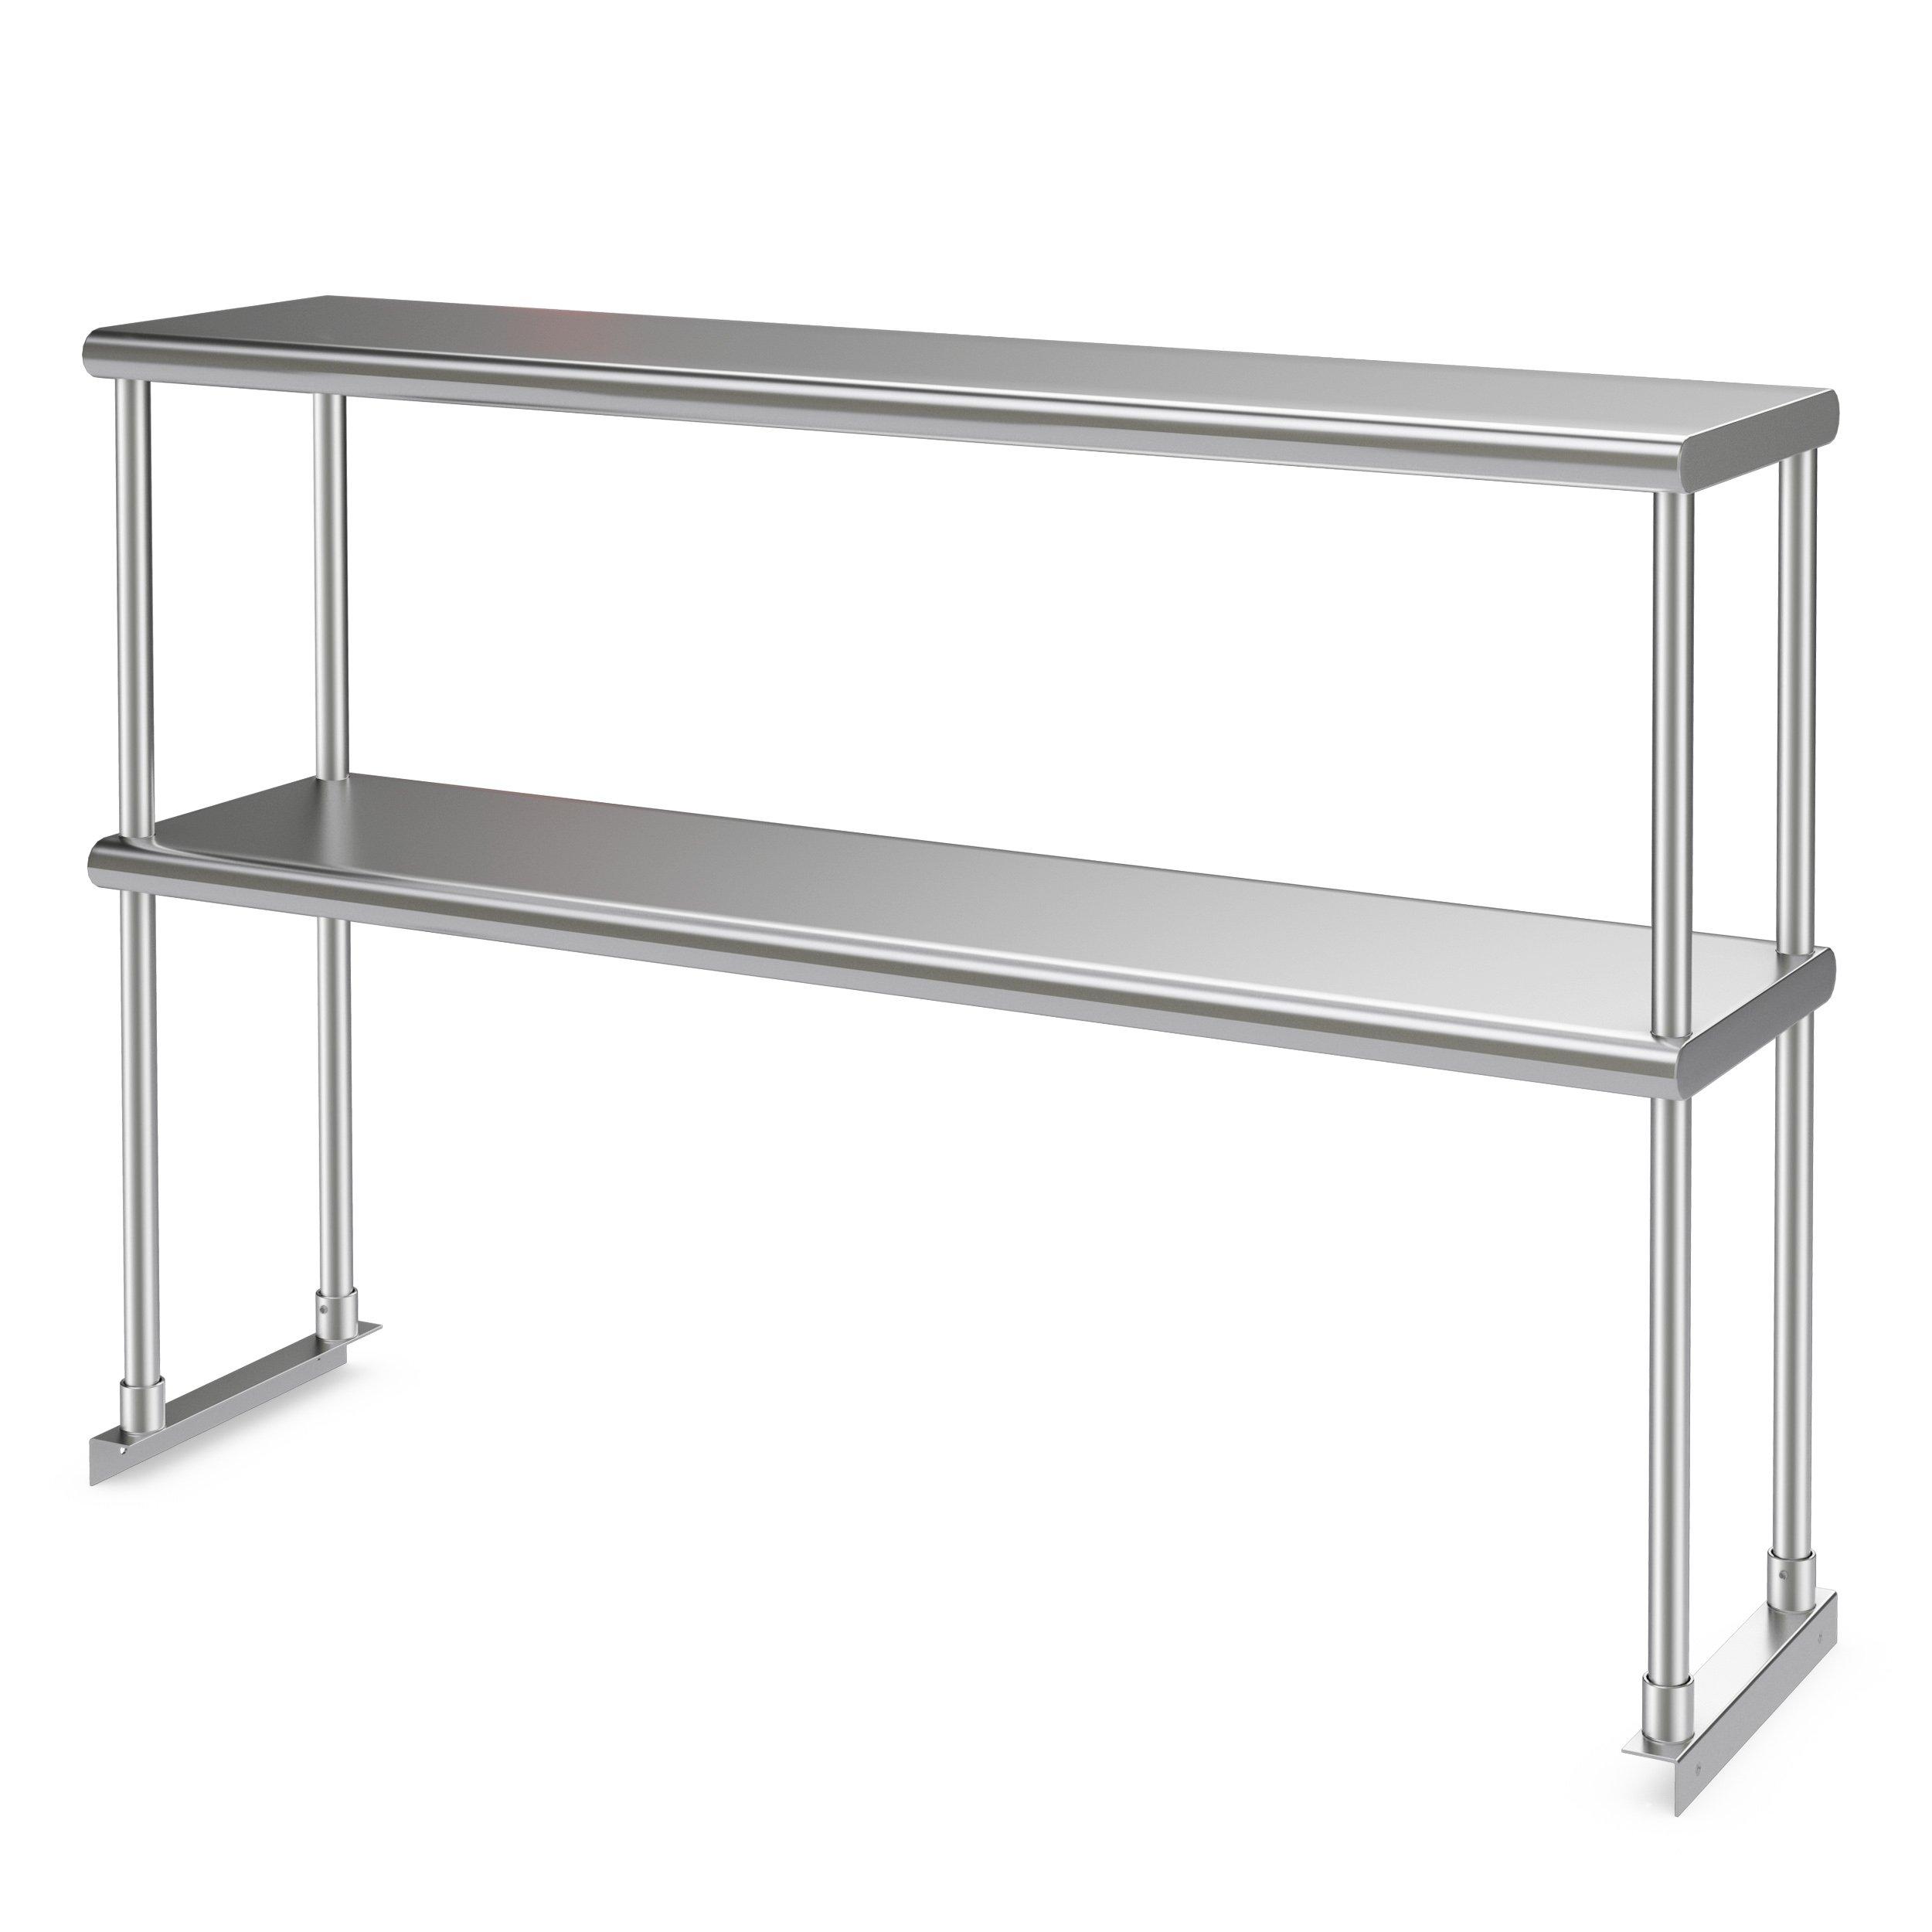 double shelf stainless steel kitchen shelf 2-tier overshelf